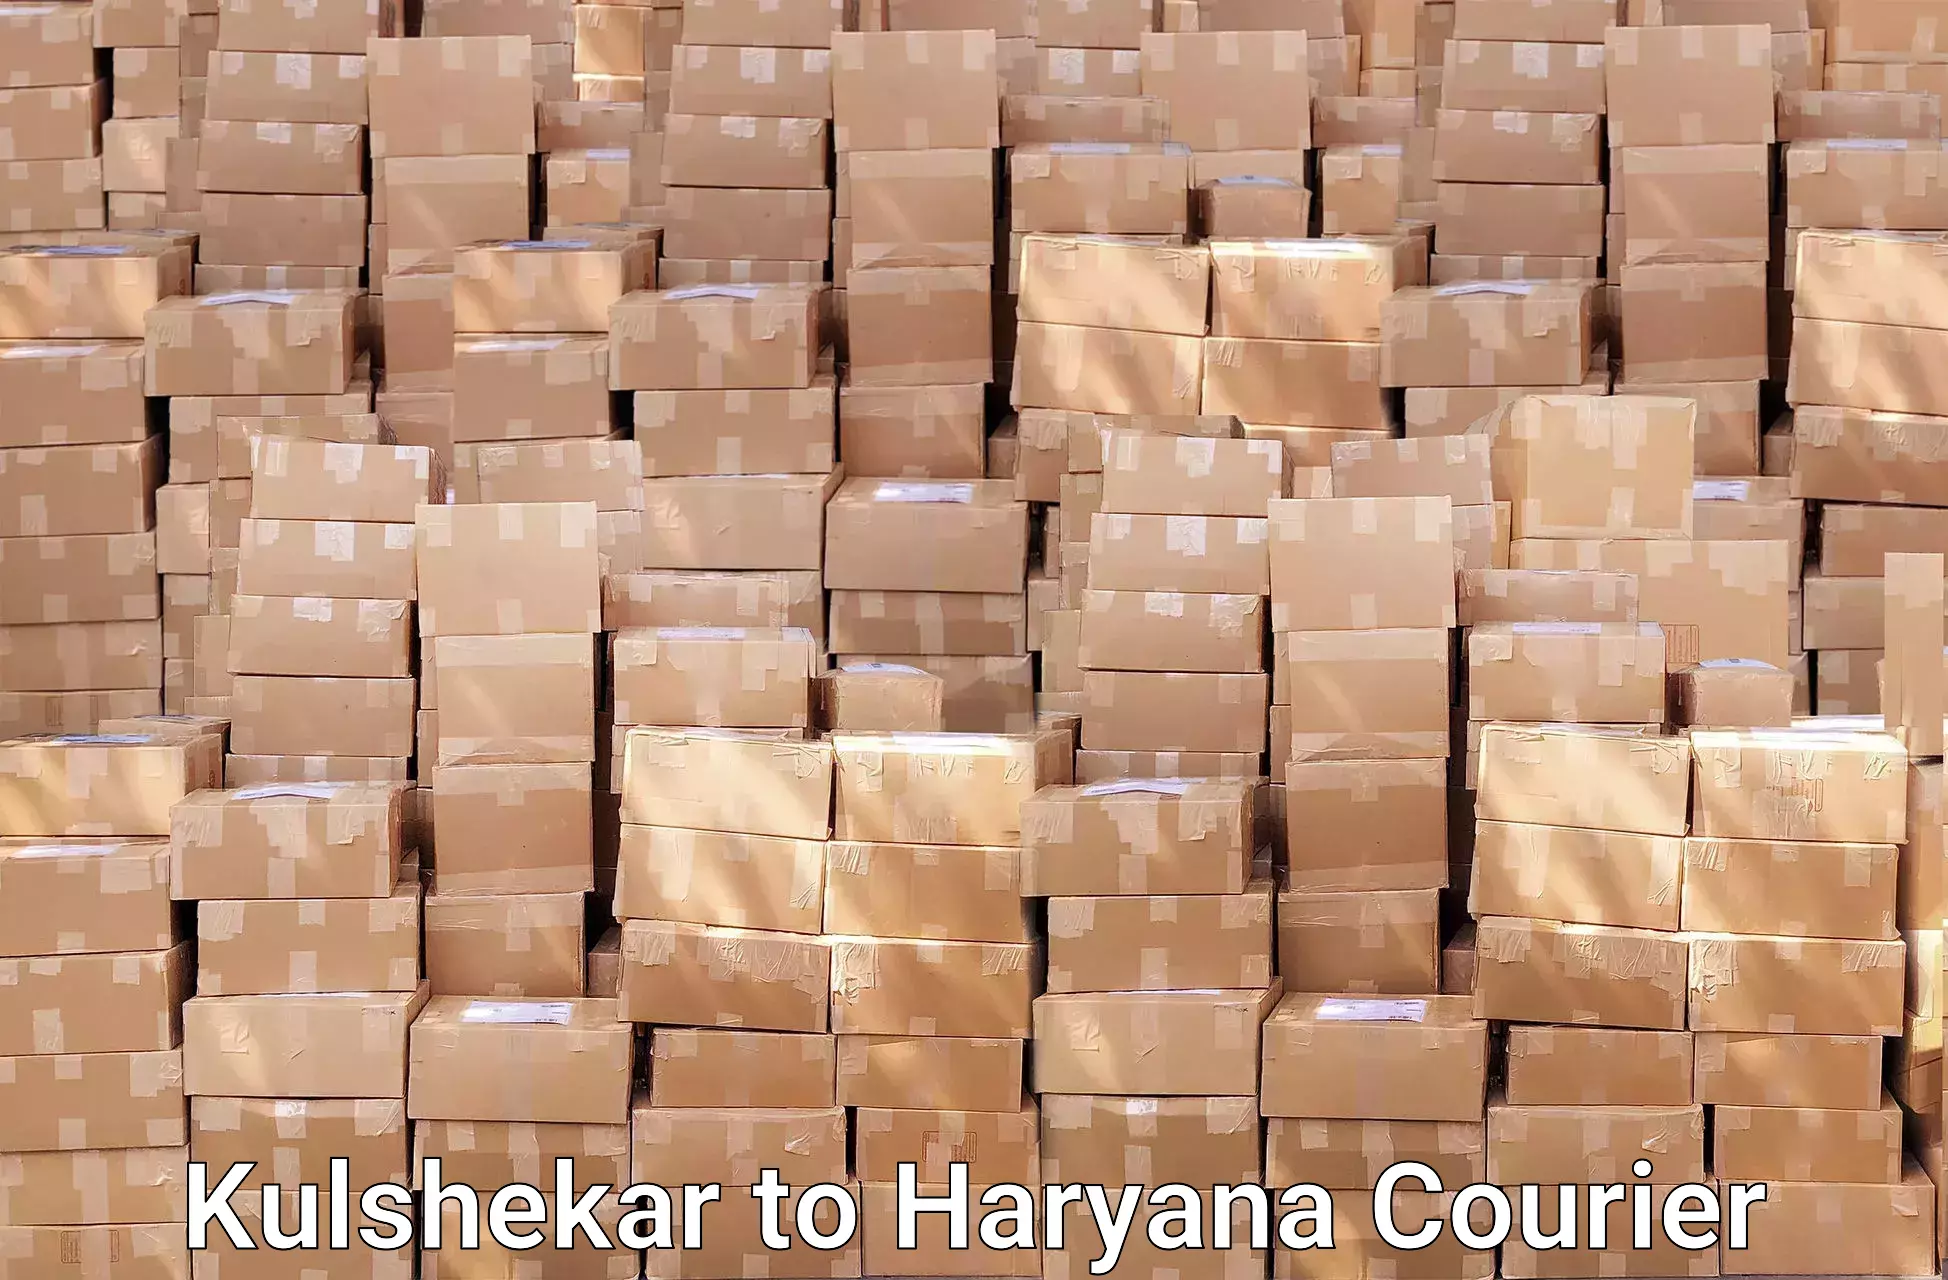 Professional movers and packers Kulshekar to Charkhari